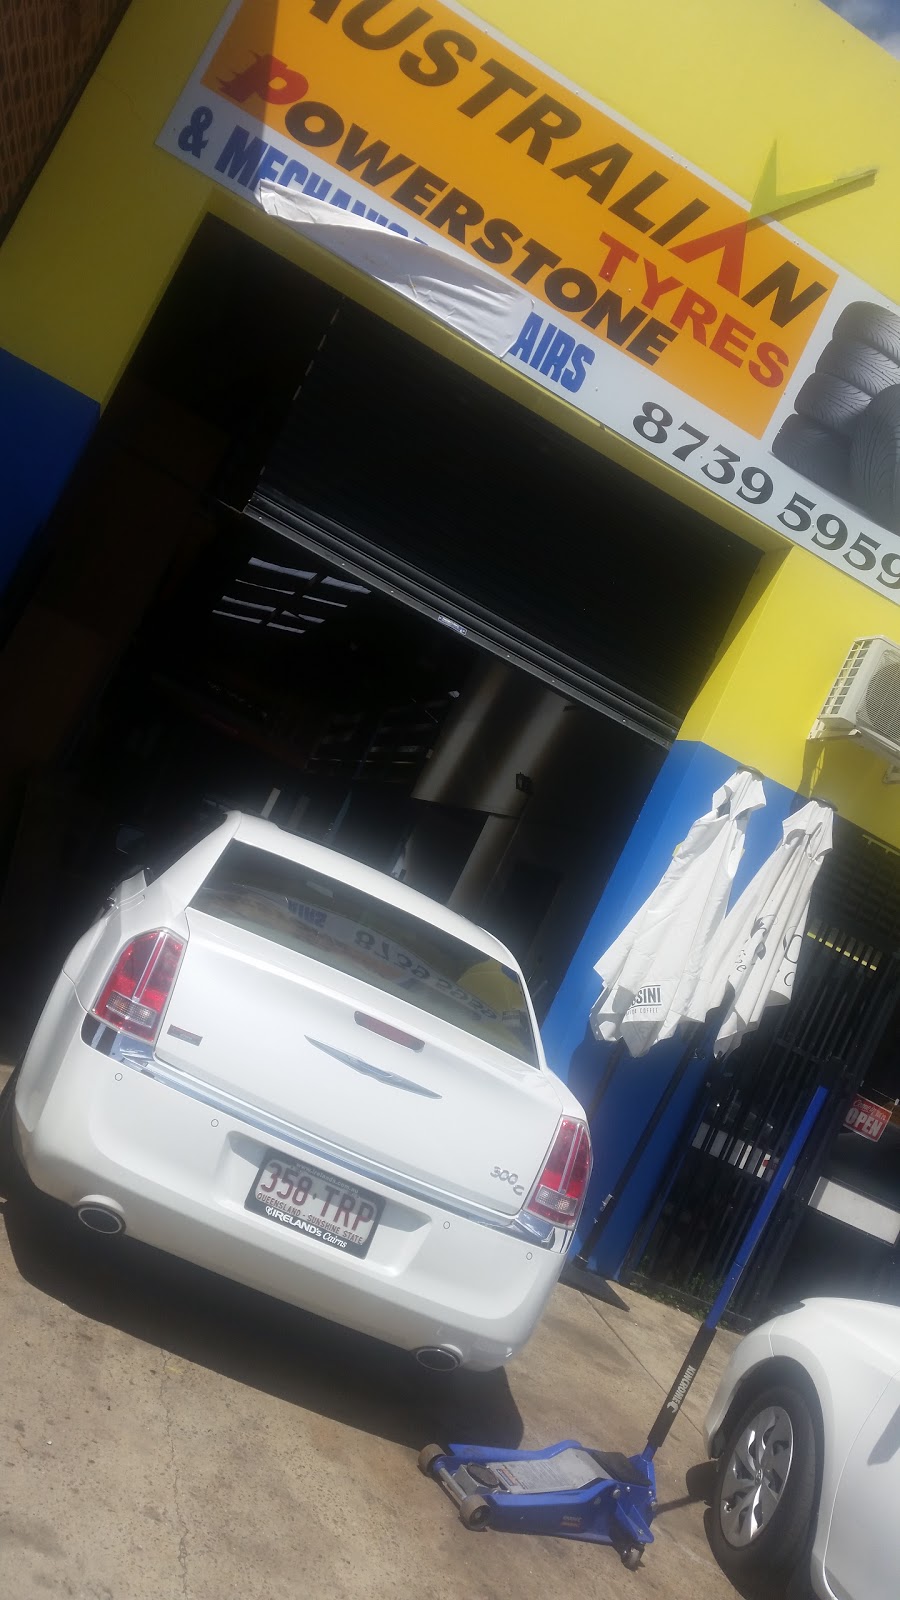 AUSTRALIAN Tyres | car repair | 41 Hoskins Ave, Bankstown NSW 2200, Australia | 0287395959 OR +61 2 8739 5959